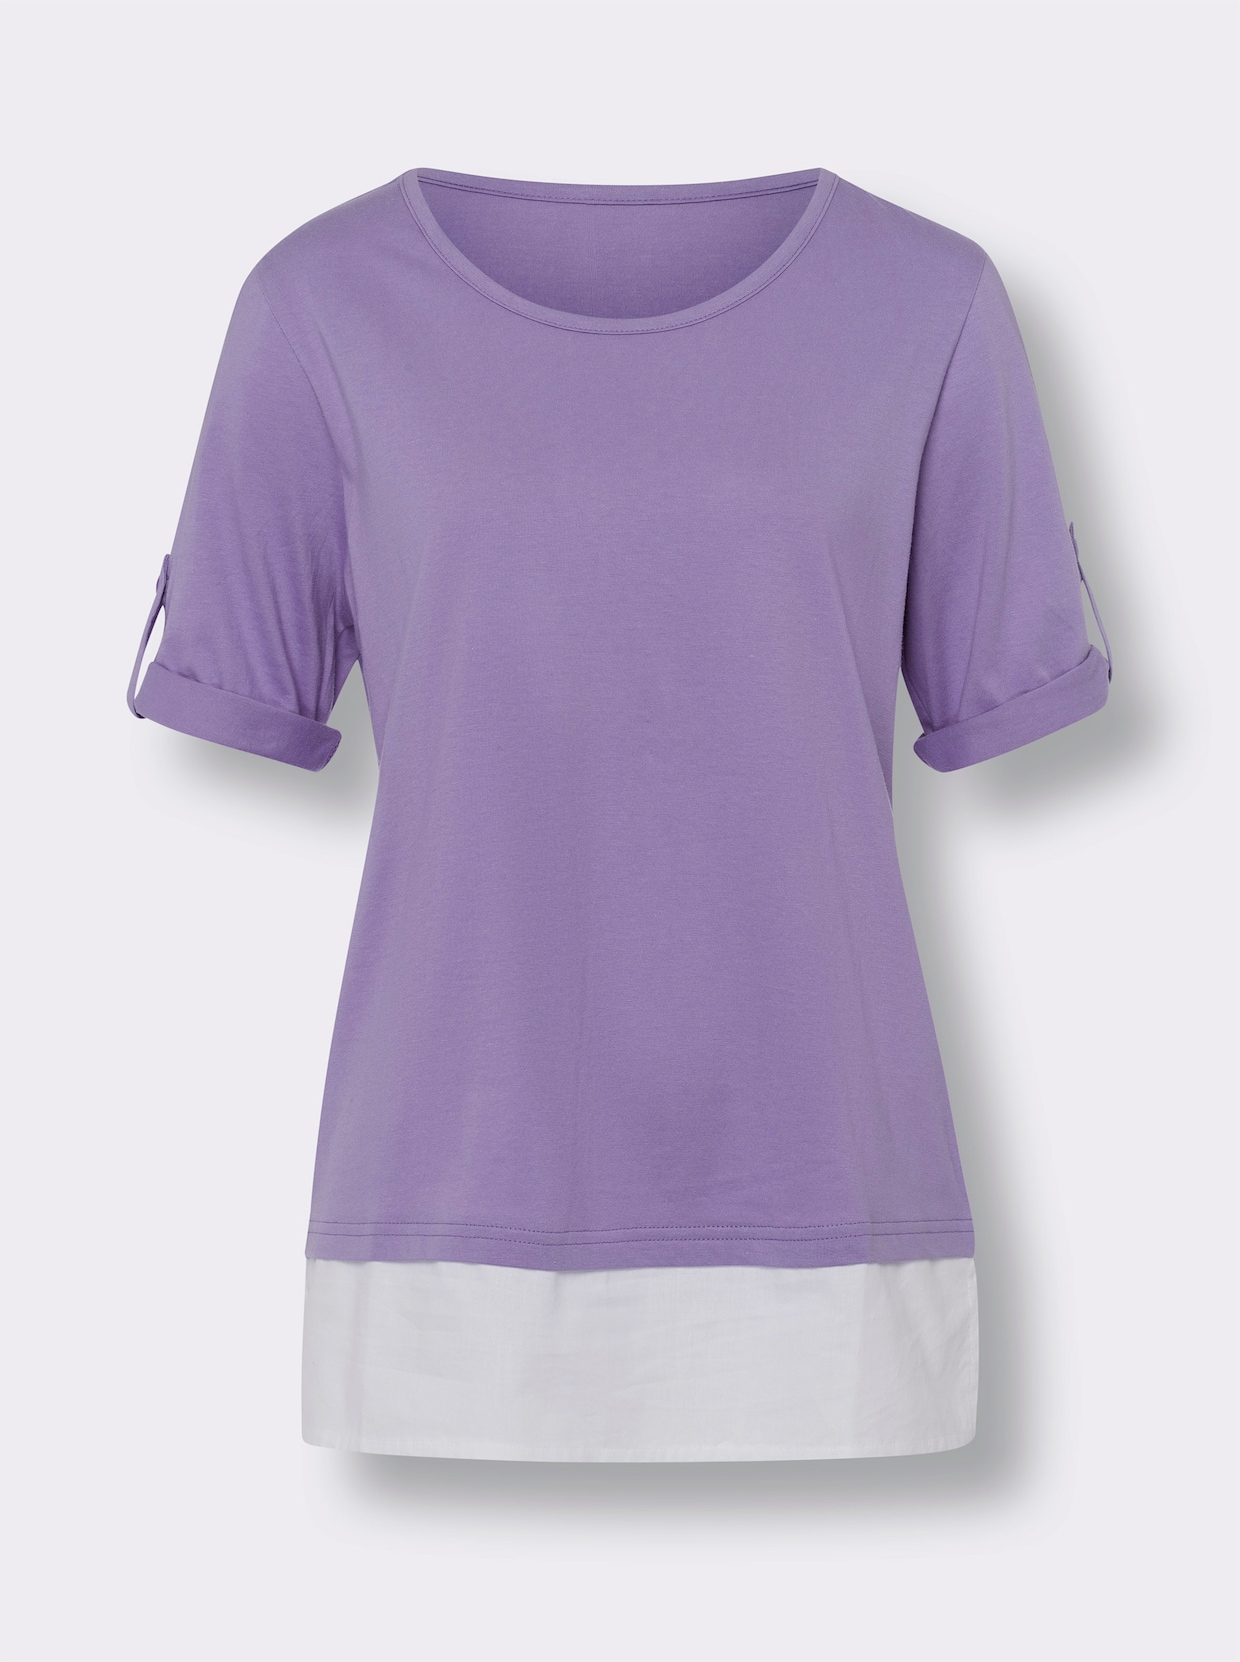 2-in-1-shirt - lavendel/wit